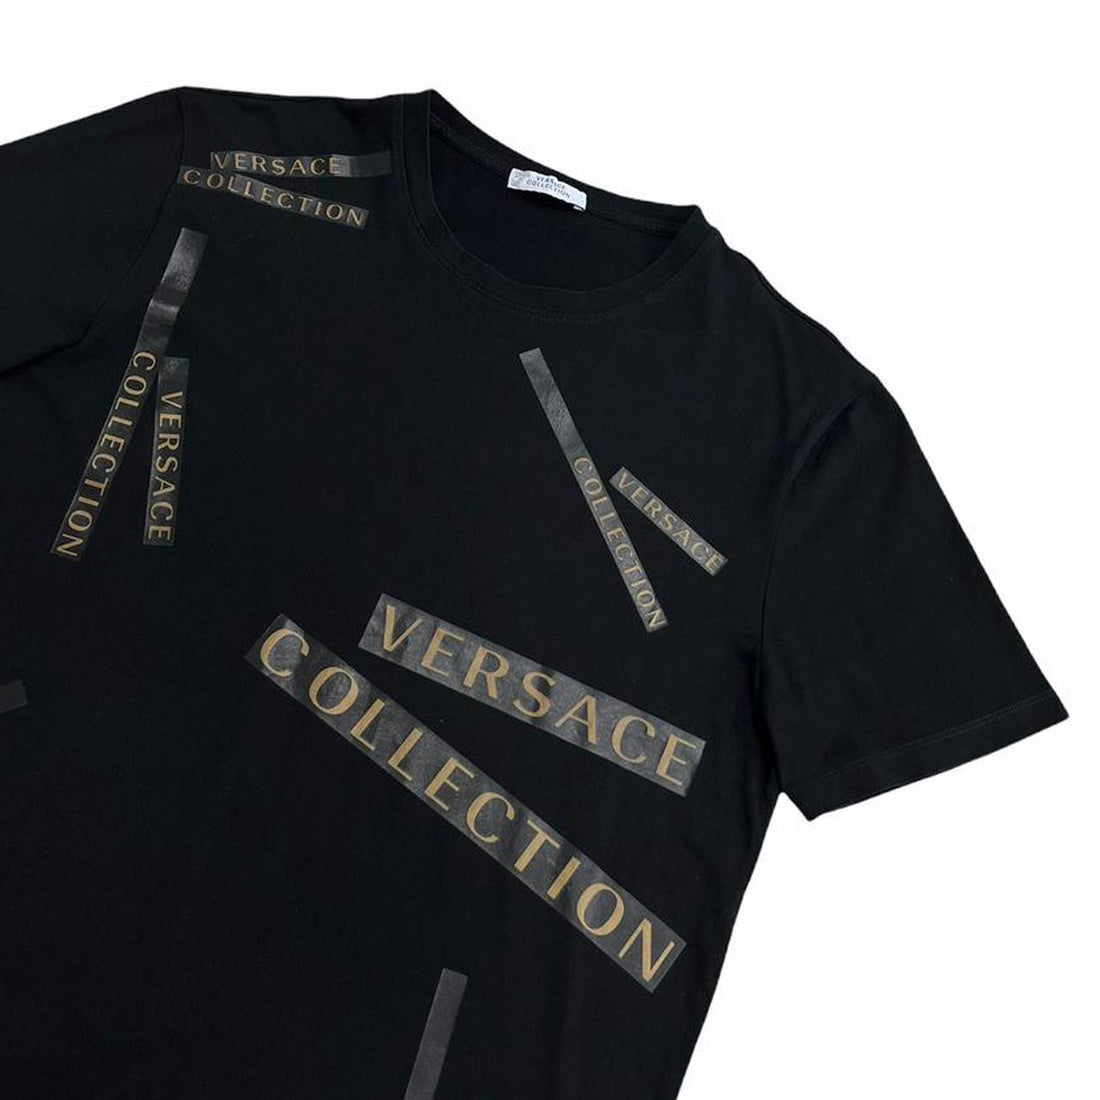 Versace black logo t-shirt